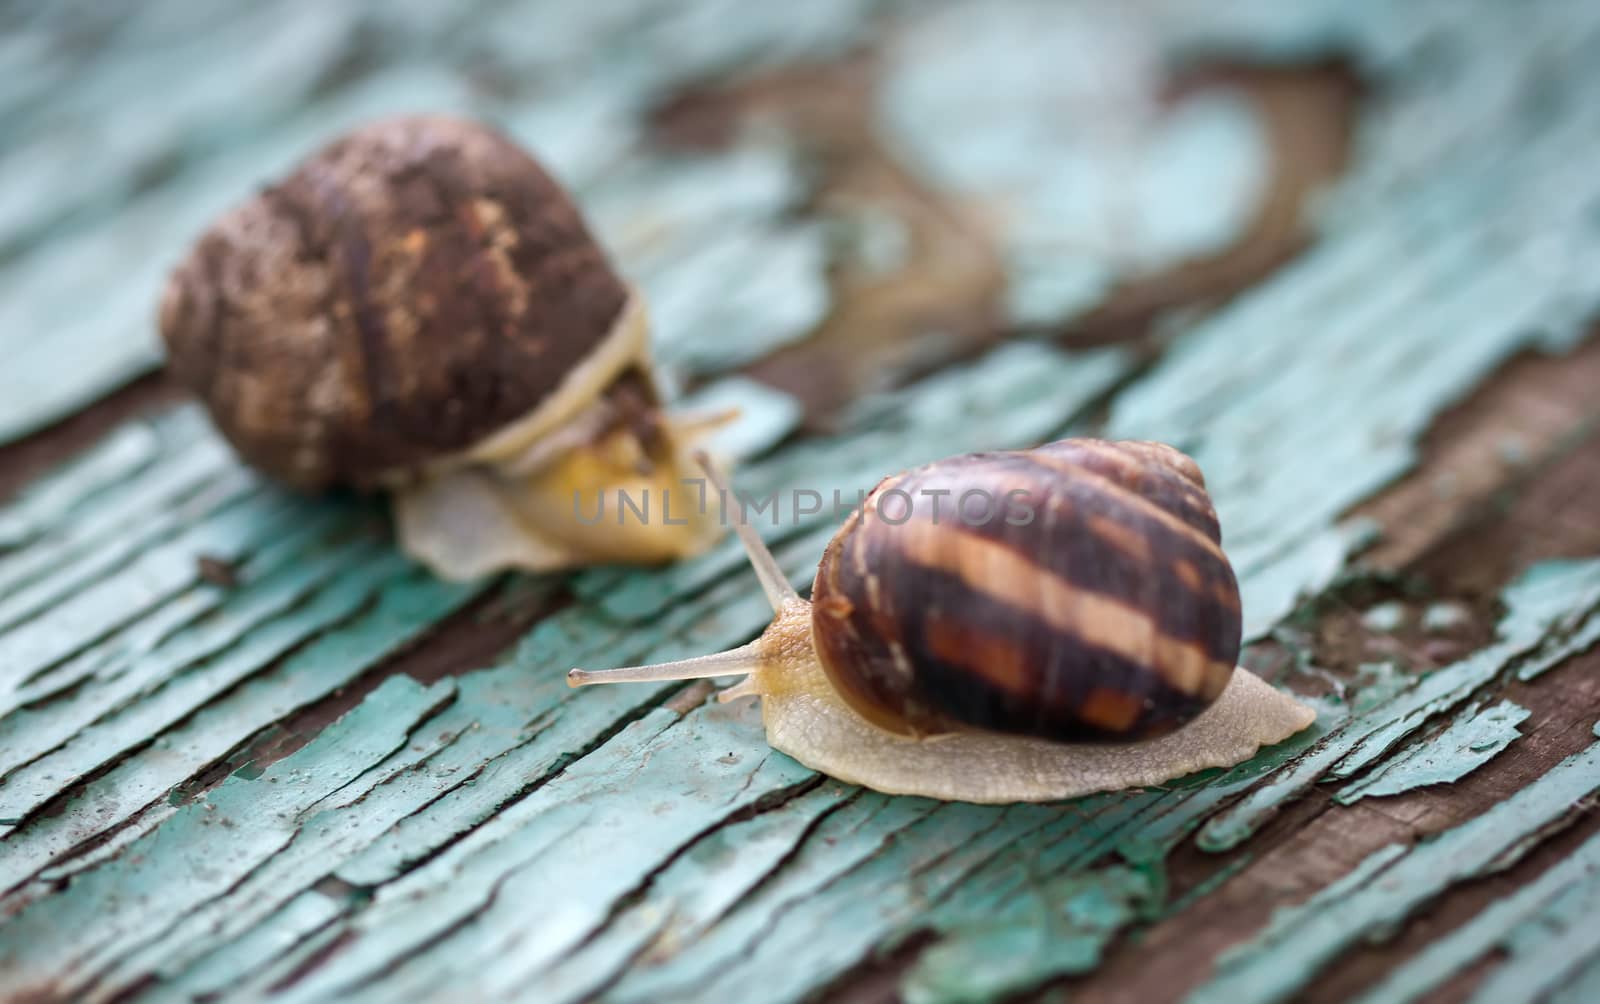 Snails by Valengilda